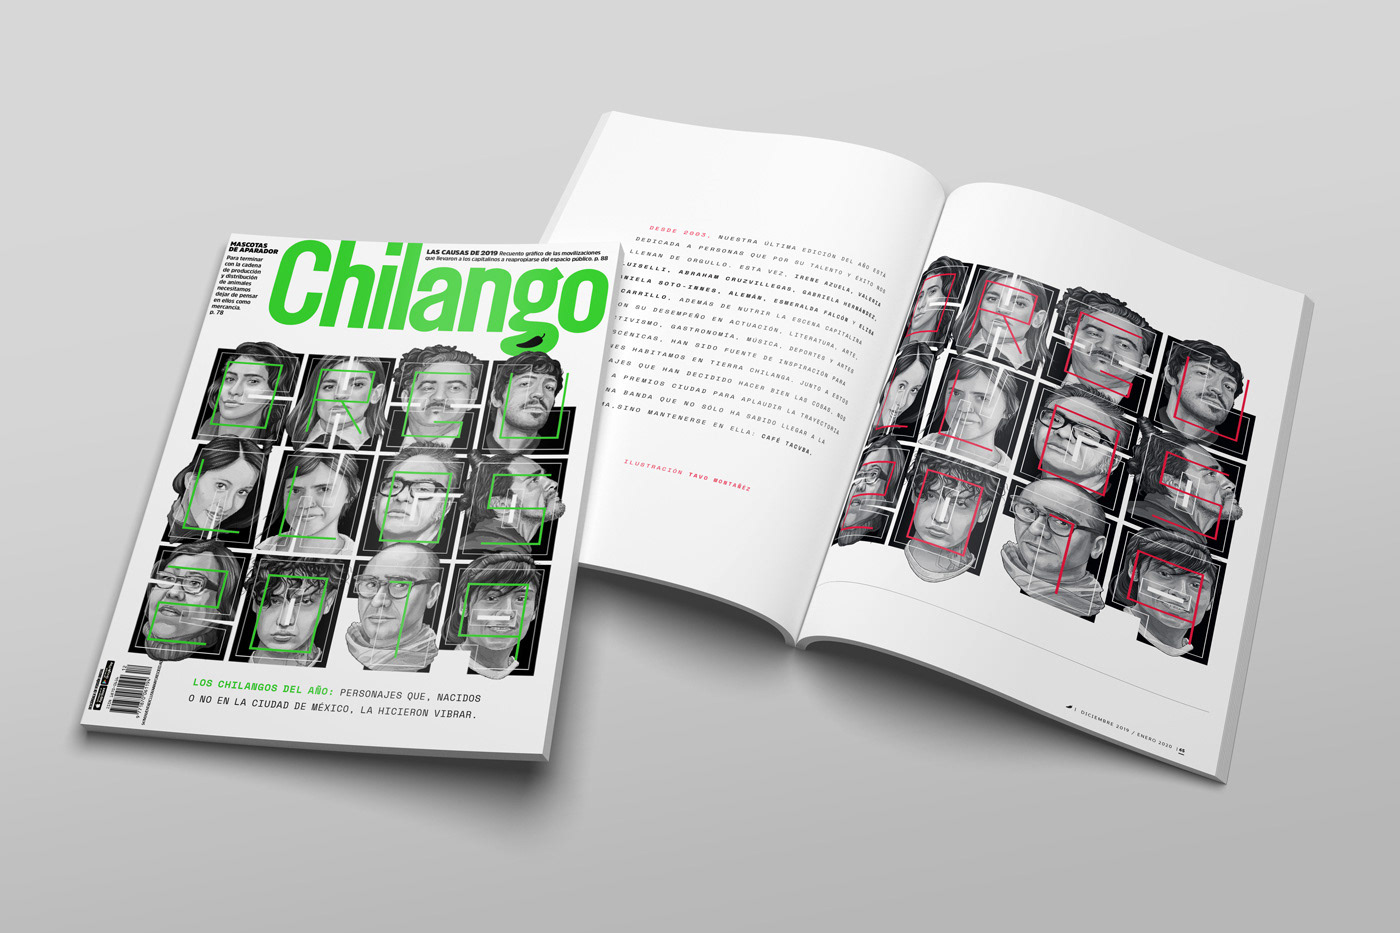 Chilango magazine Cafe Tacvba mexico cover cover design Editorial Illustration digital illustration wacom Adobe Photoshop